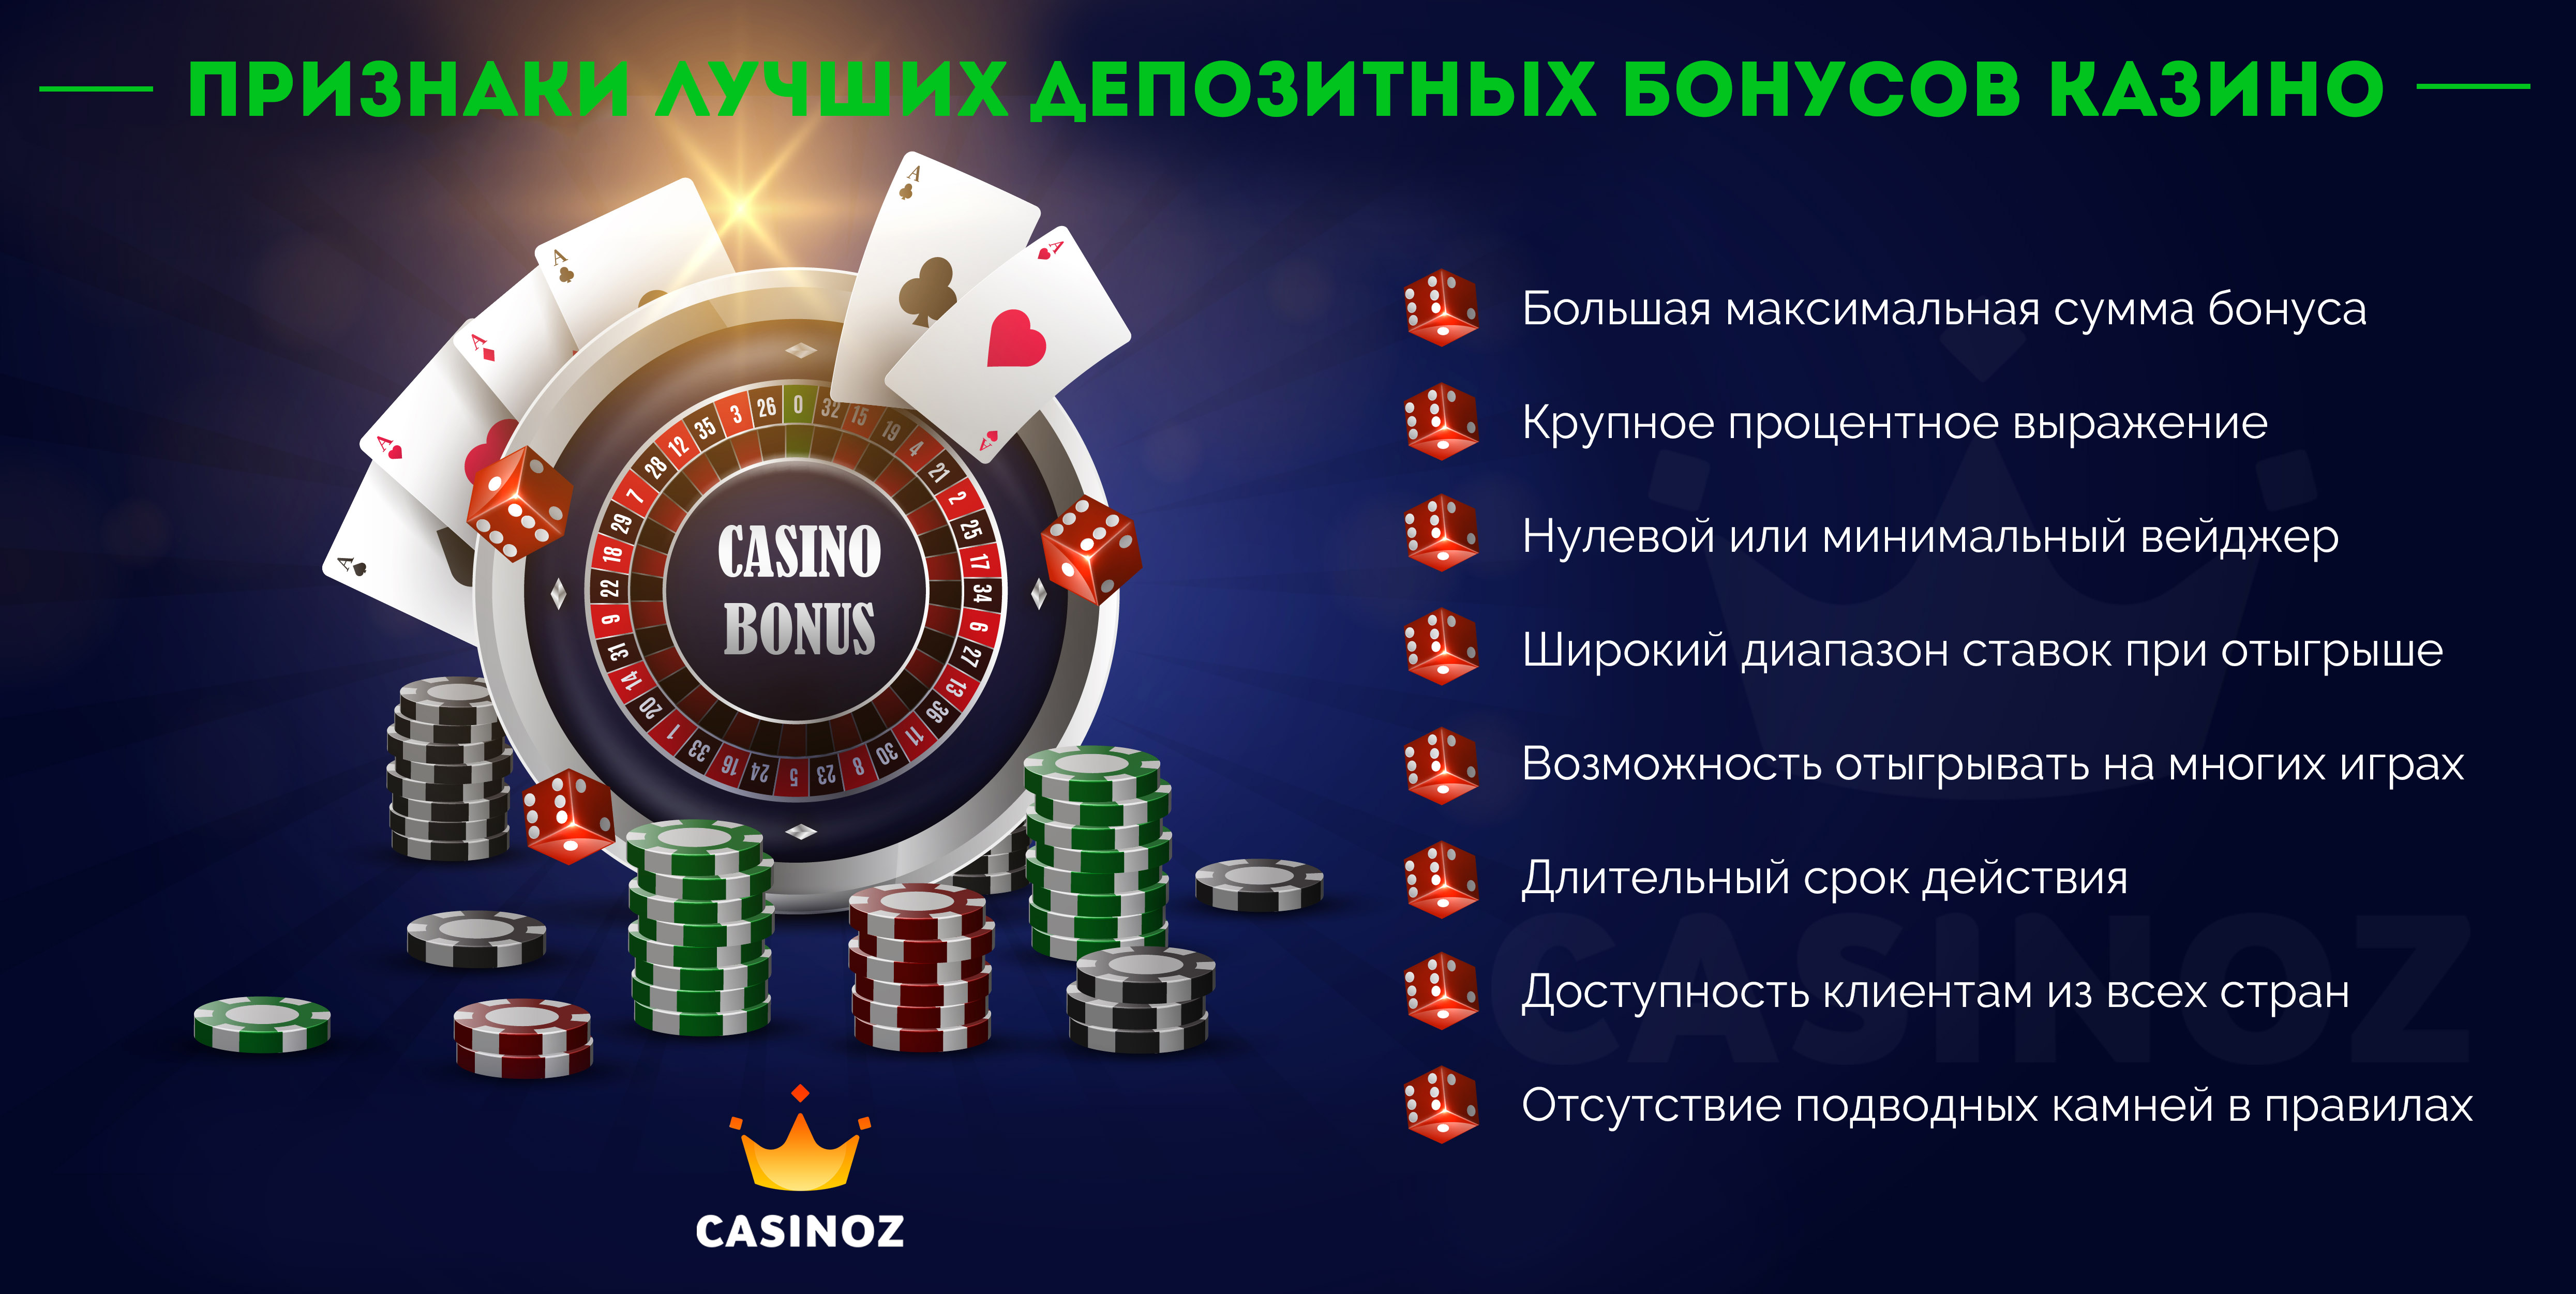 Game casino бездепозитный бонус gamma casino gear